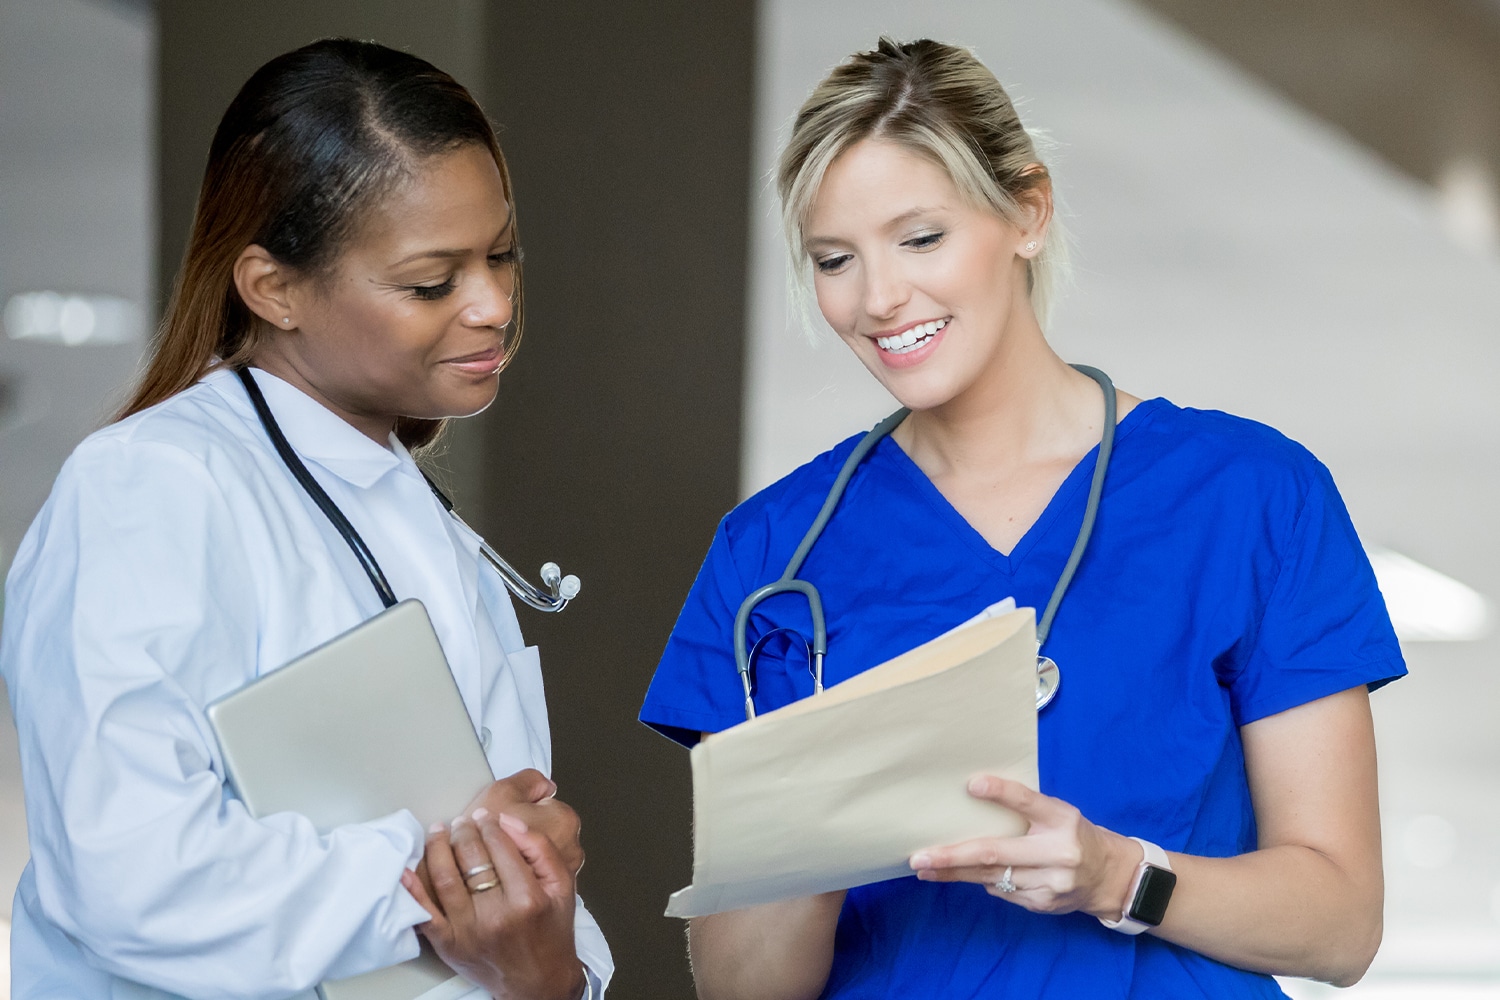 Certified Nursing Assistant Program in Houston, TX | CNA Training